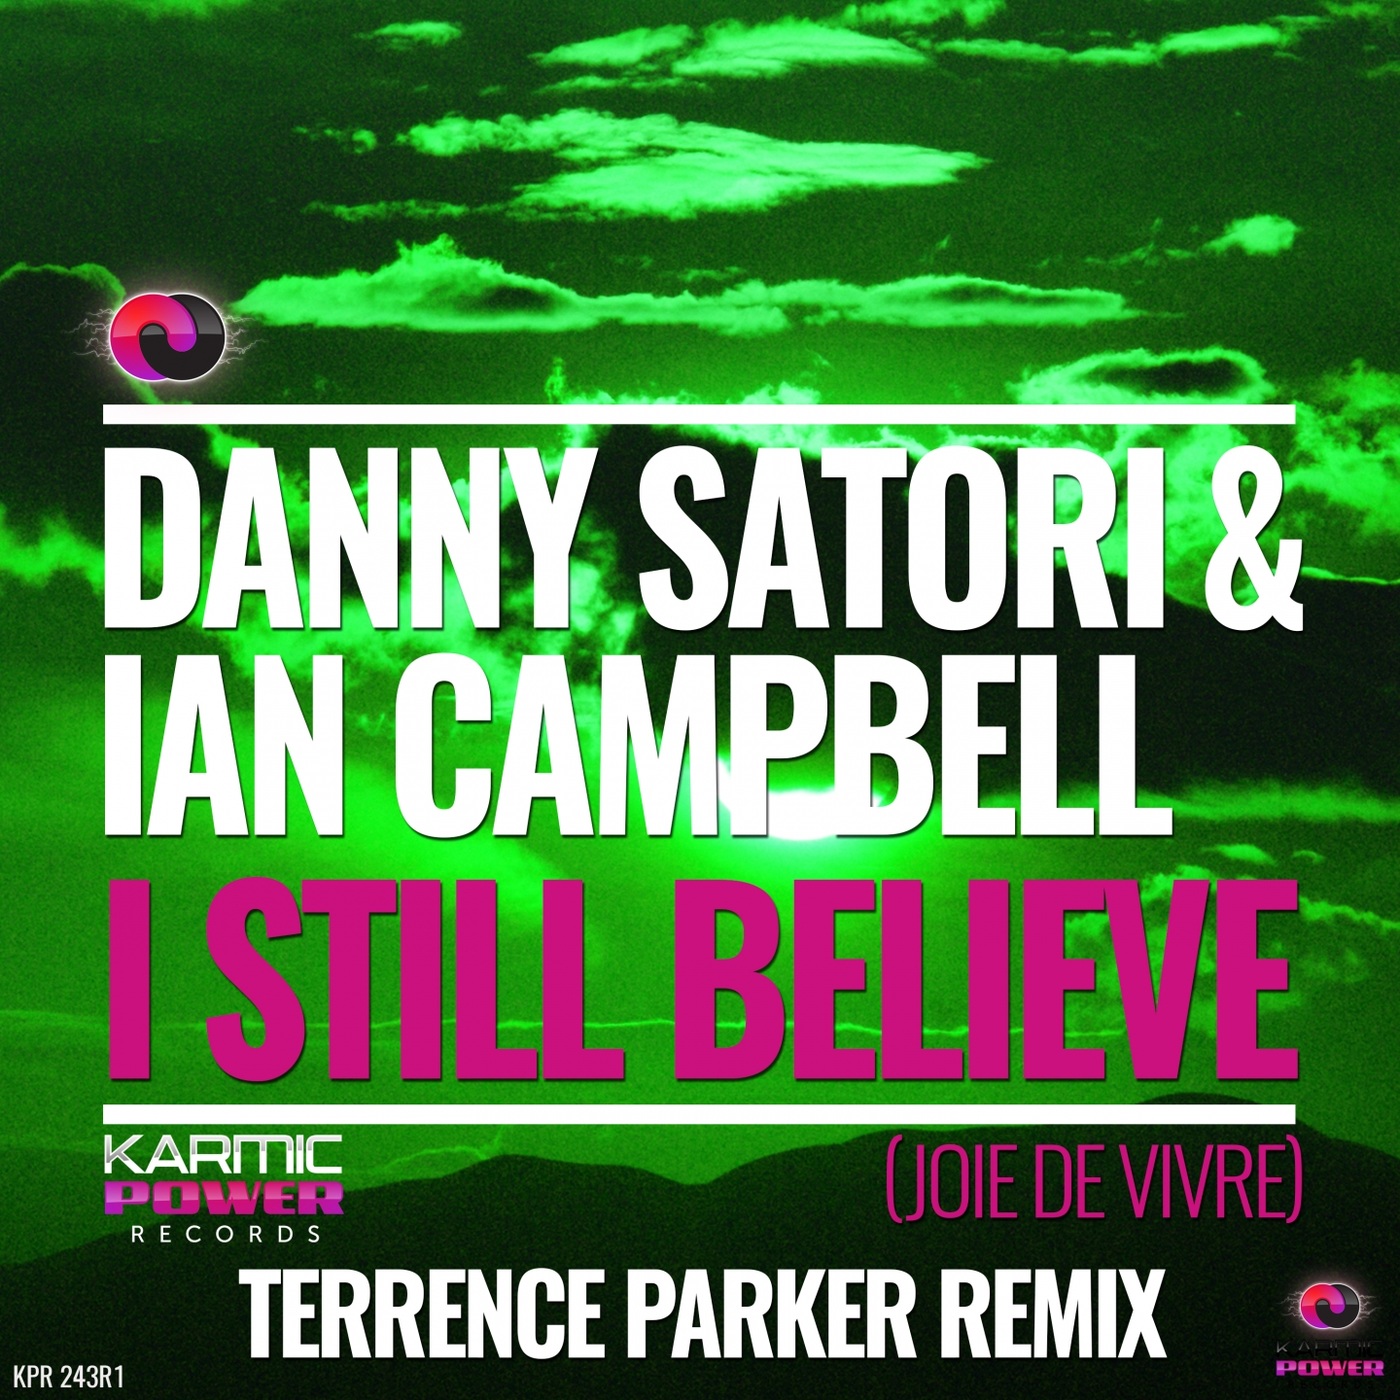 Danny Satori & Ian Campbell - I Still Believe (Joie De Vivre) / Karmic Power Records